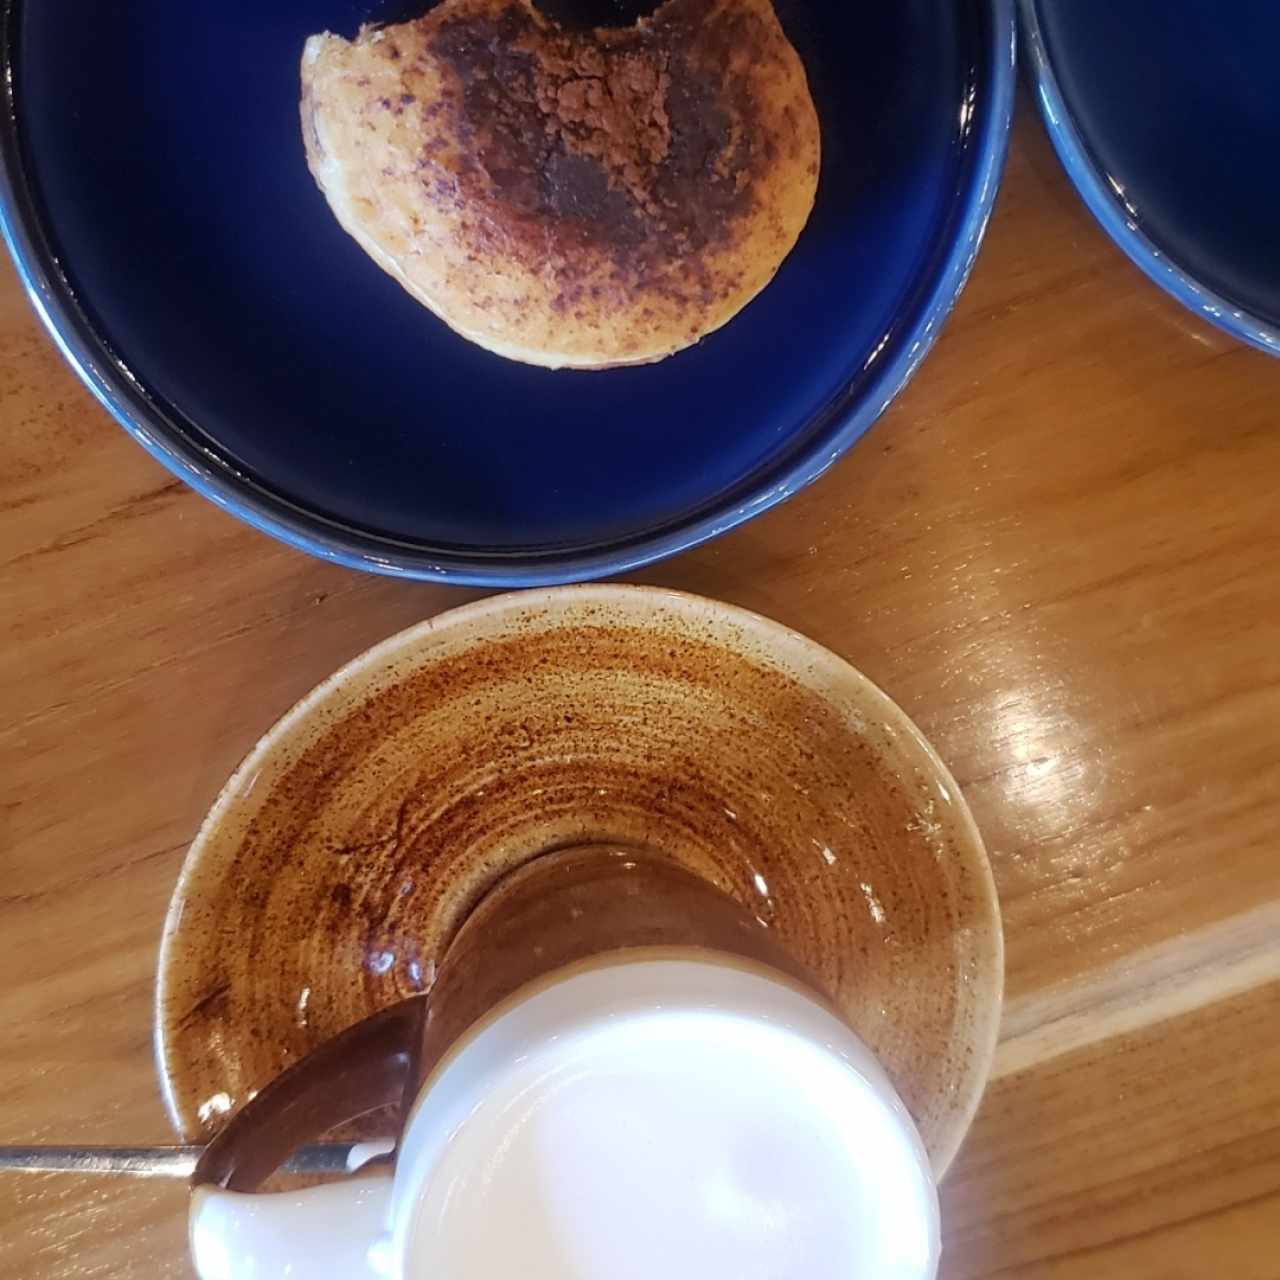 Bomba de nutella y Té Chai